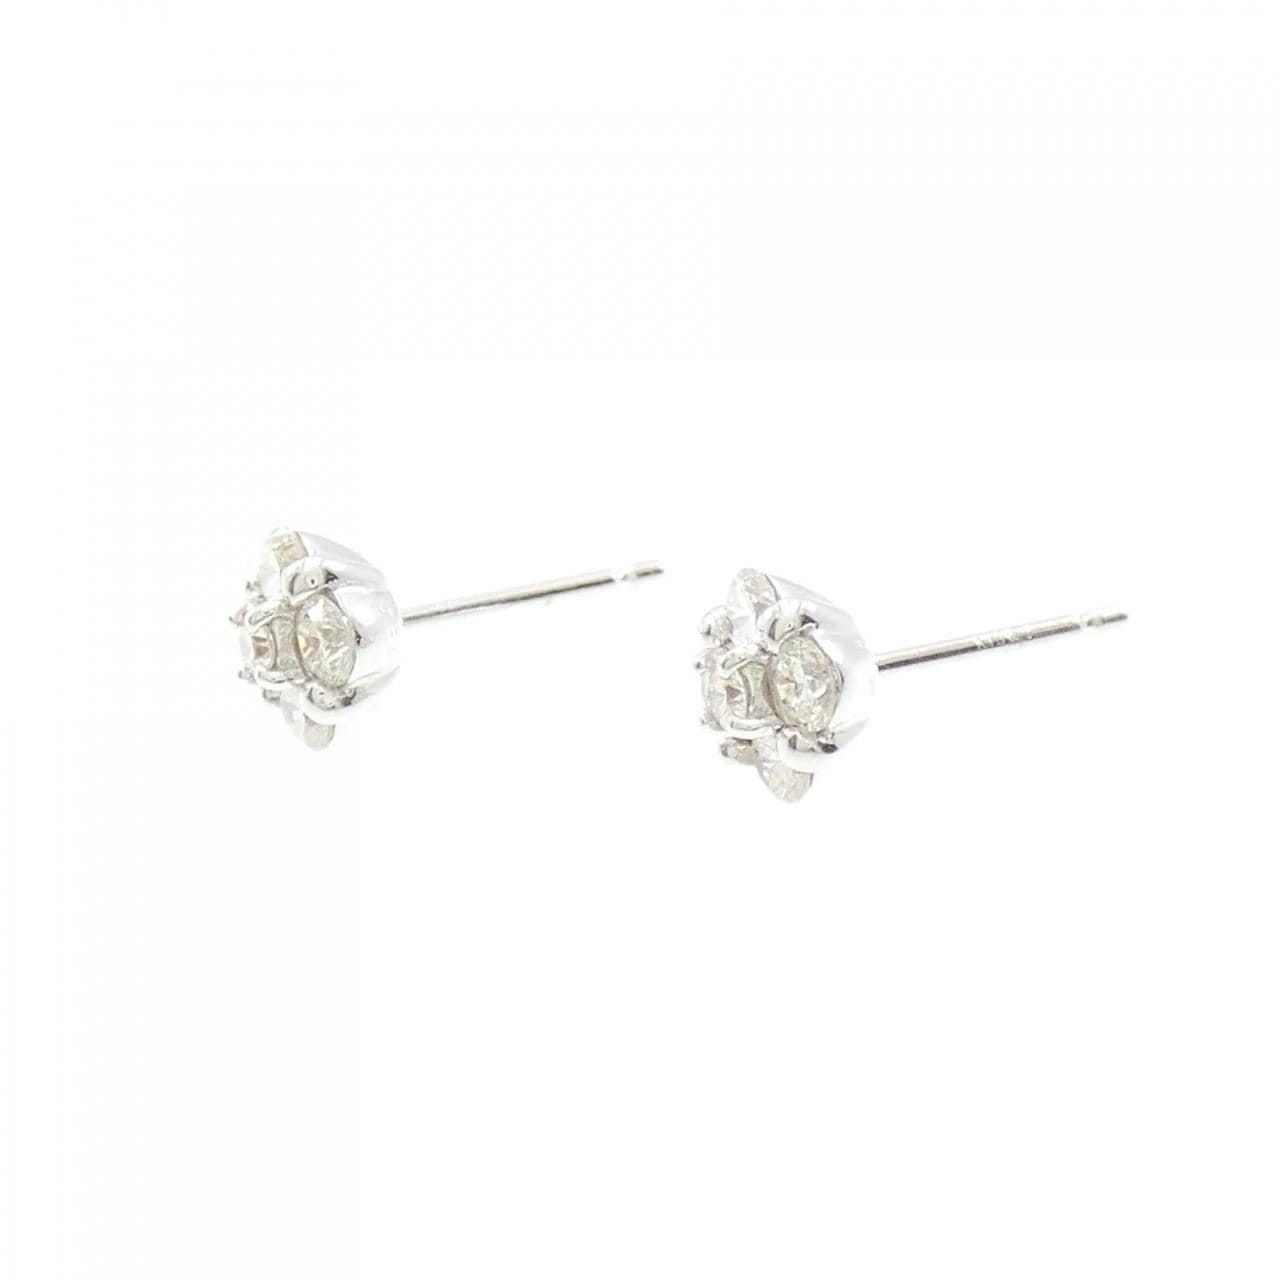 K18WG Flower Diamond Earrings 0.90CT